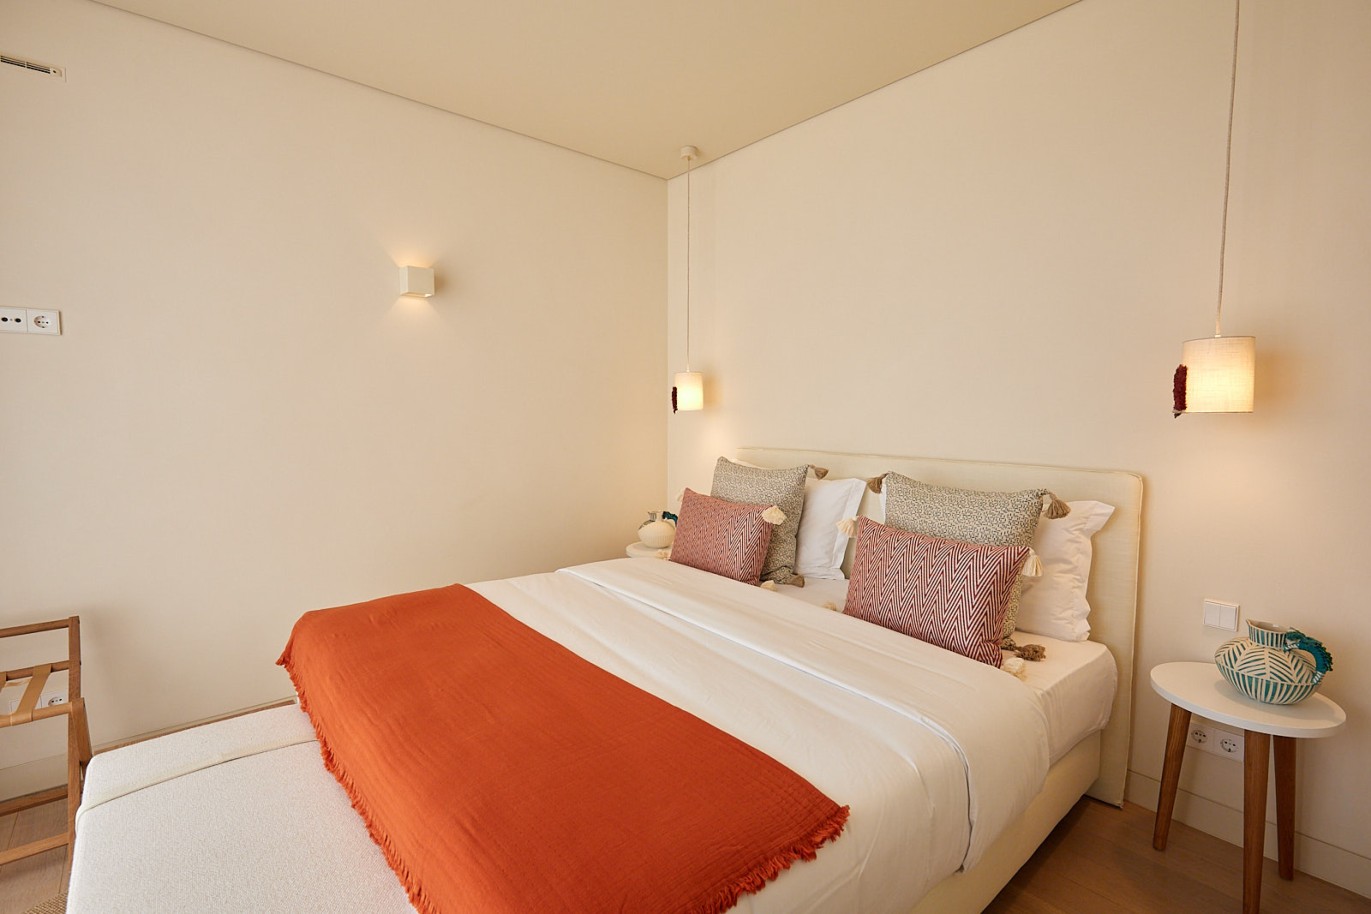 1 bedroom apartment in resort, for sale in Porches, Algarve_228990